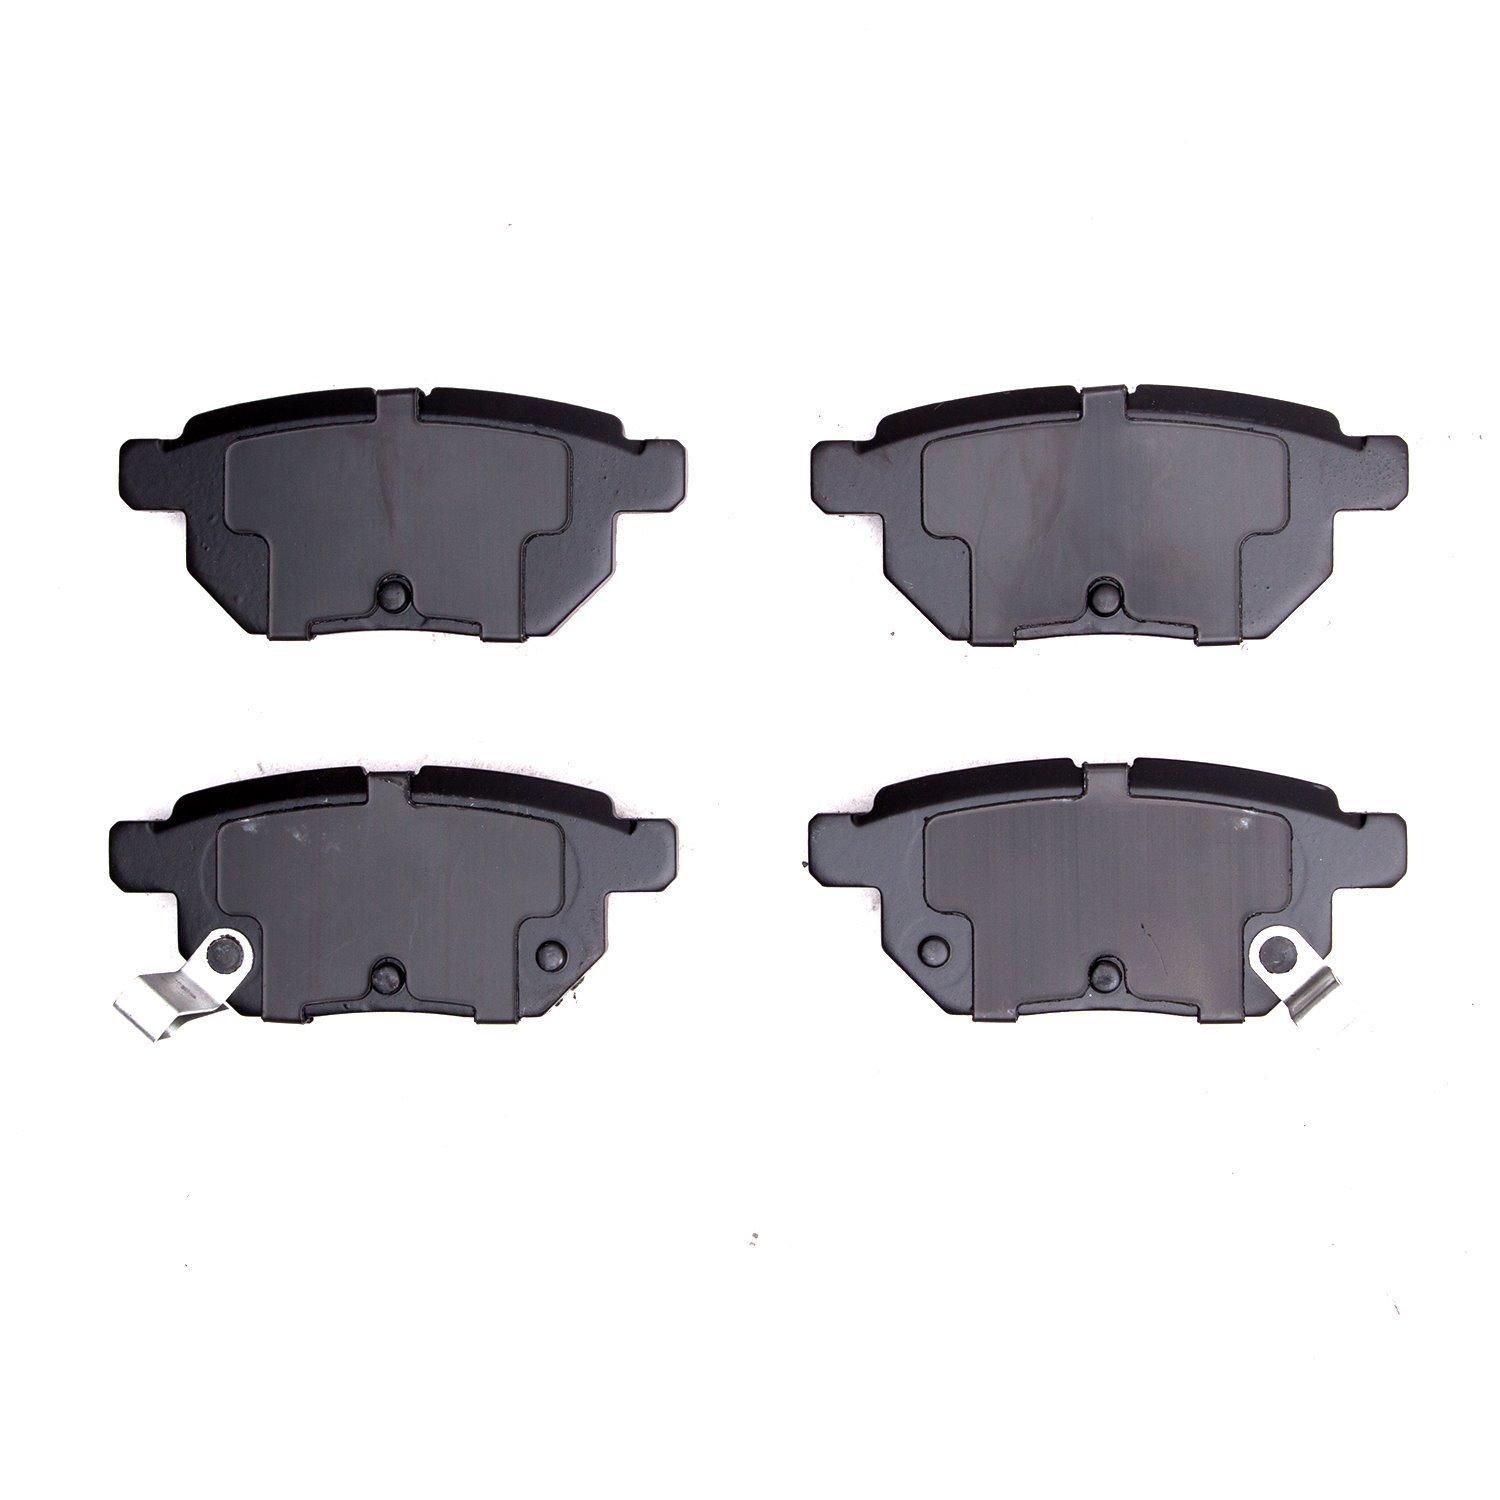 1311-1423-00 3000-Series Semi-Metallic Brake Pads, Fits Select Multiple Makes/Models, Position: Rear